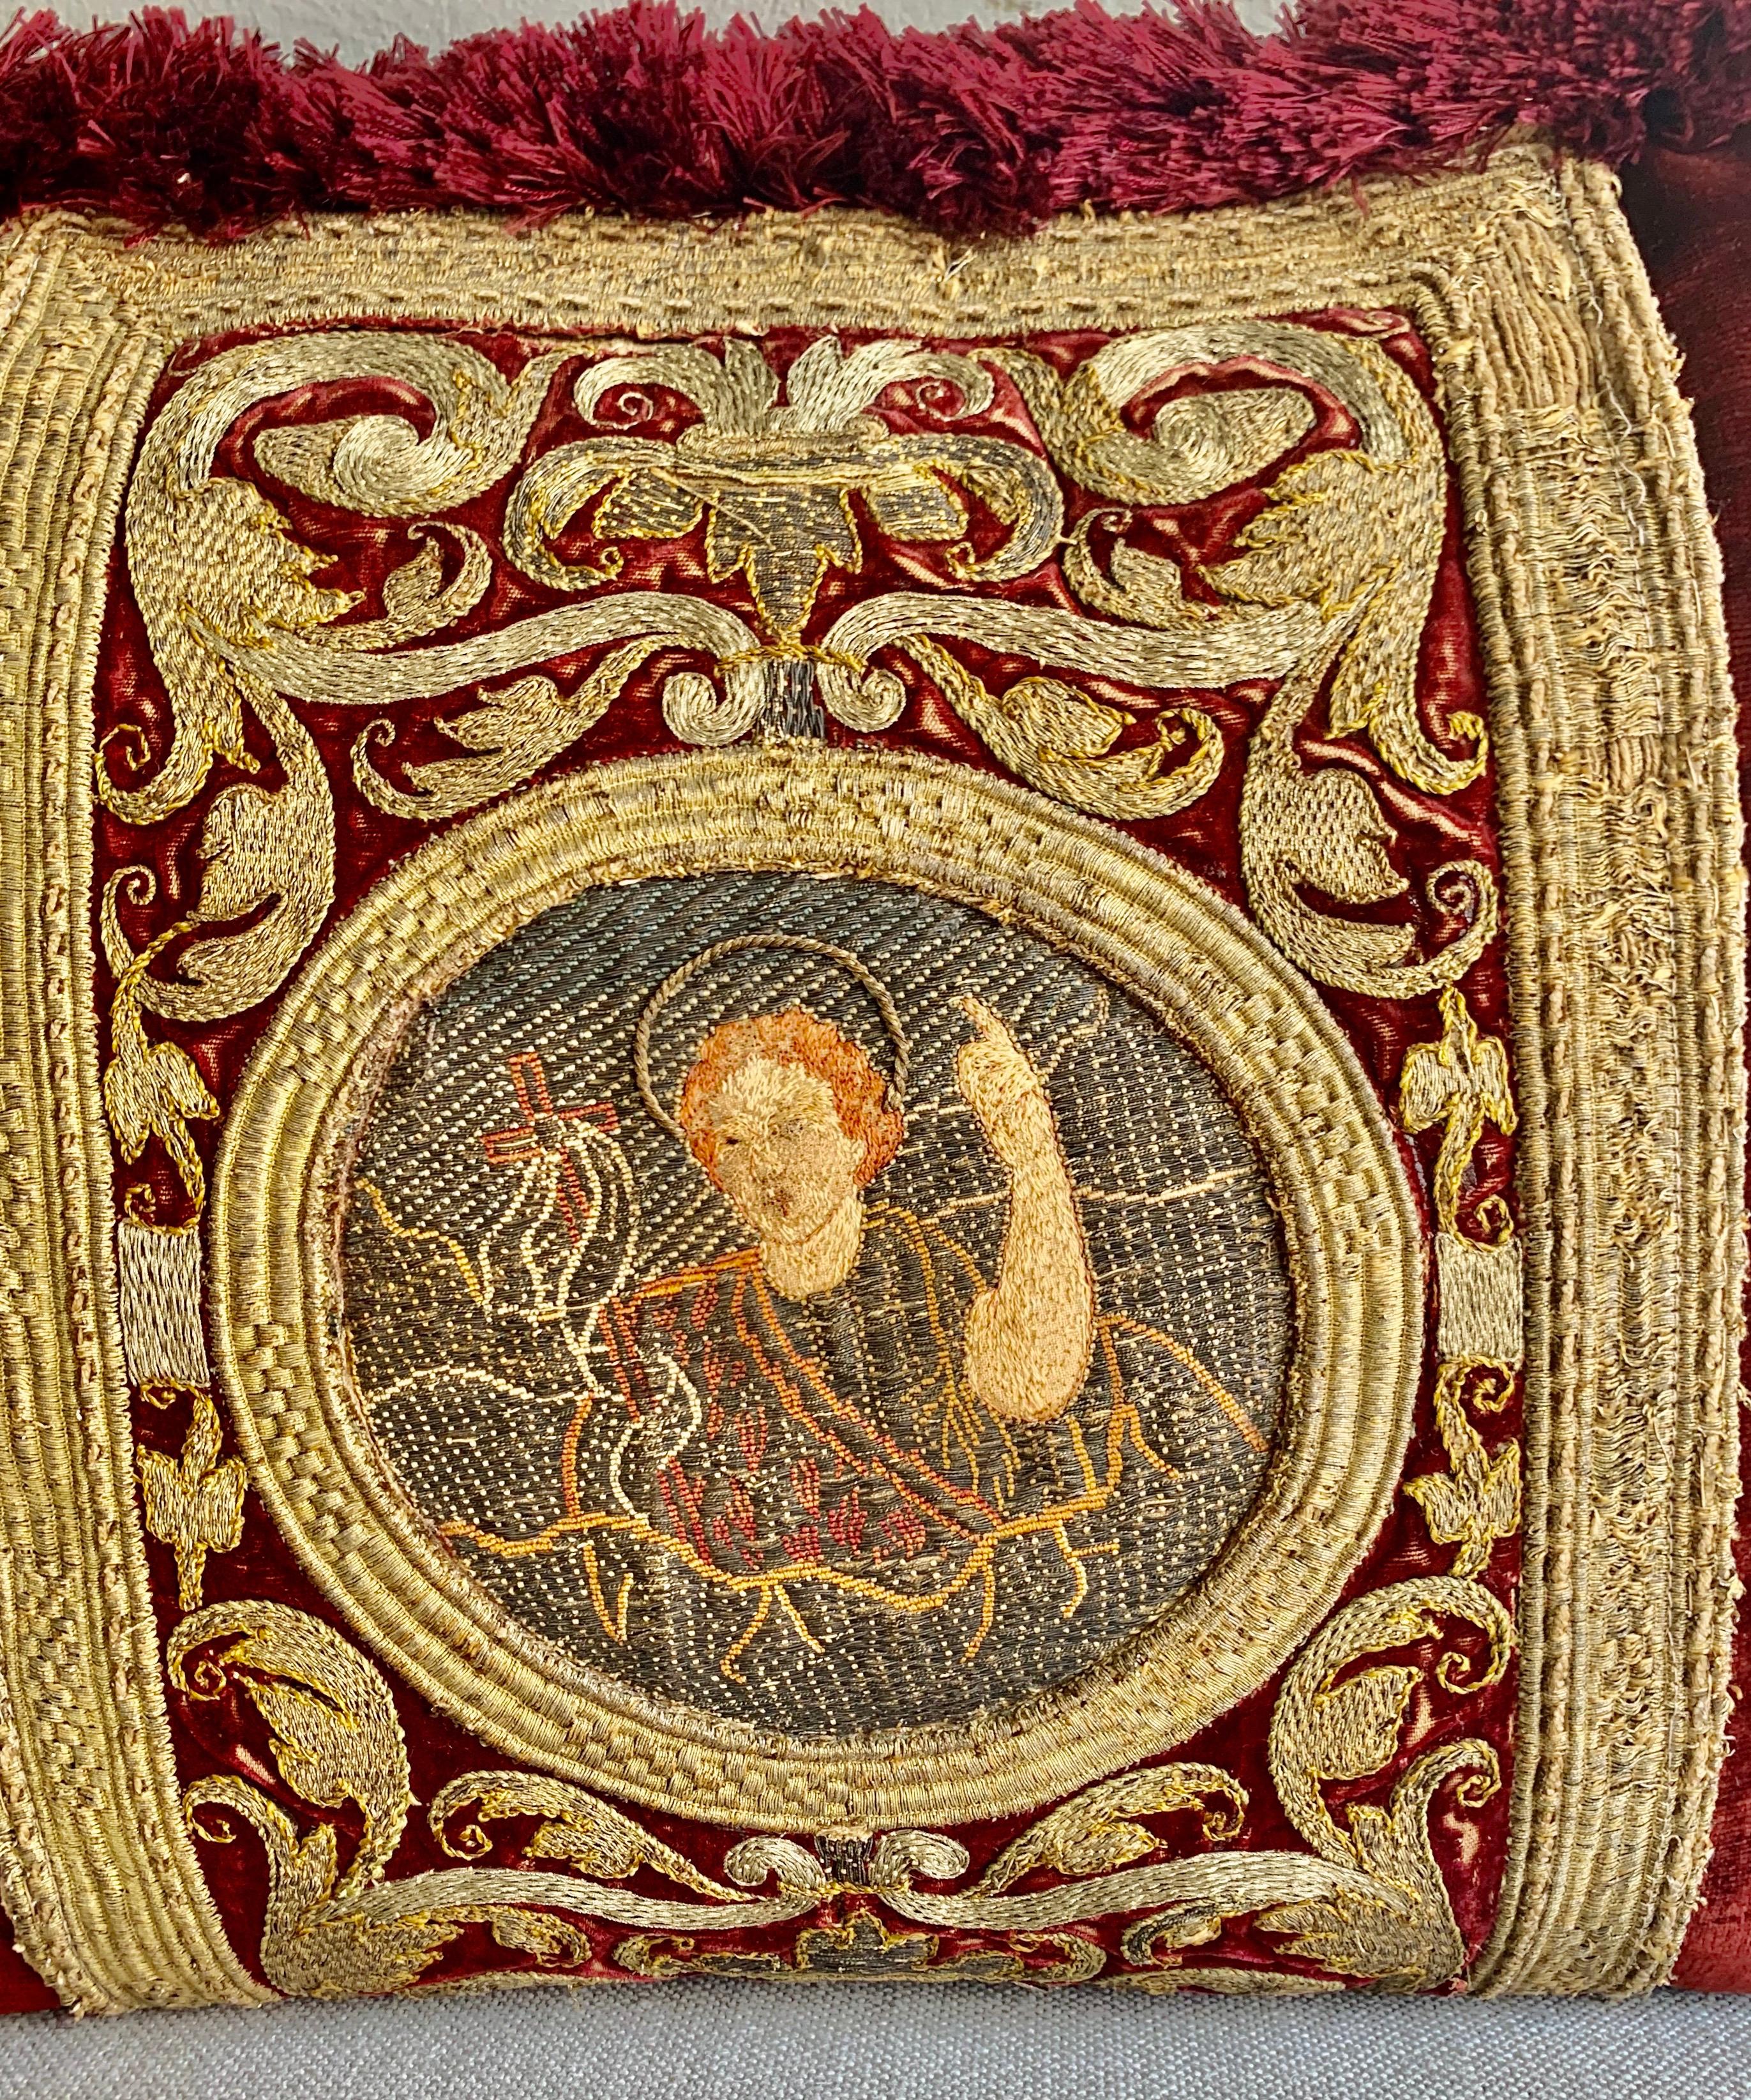 Italian Pair of 18th Century Metallic Embroidered Red Velvet Pillows